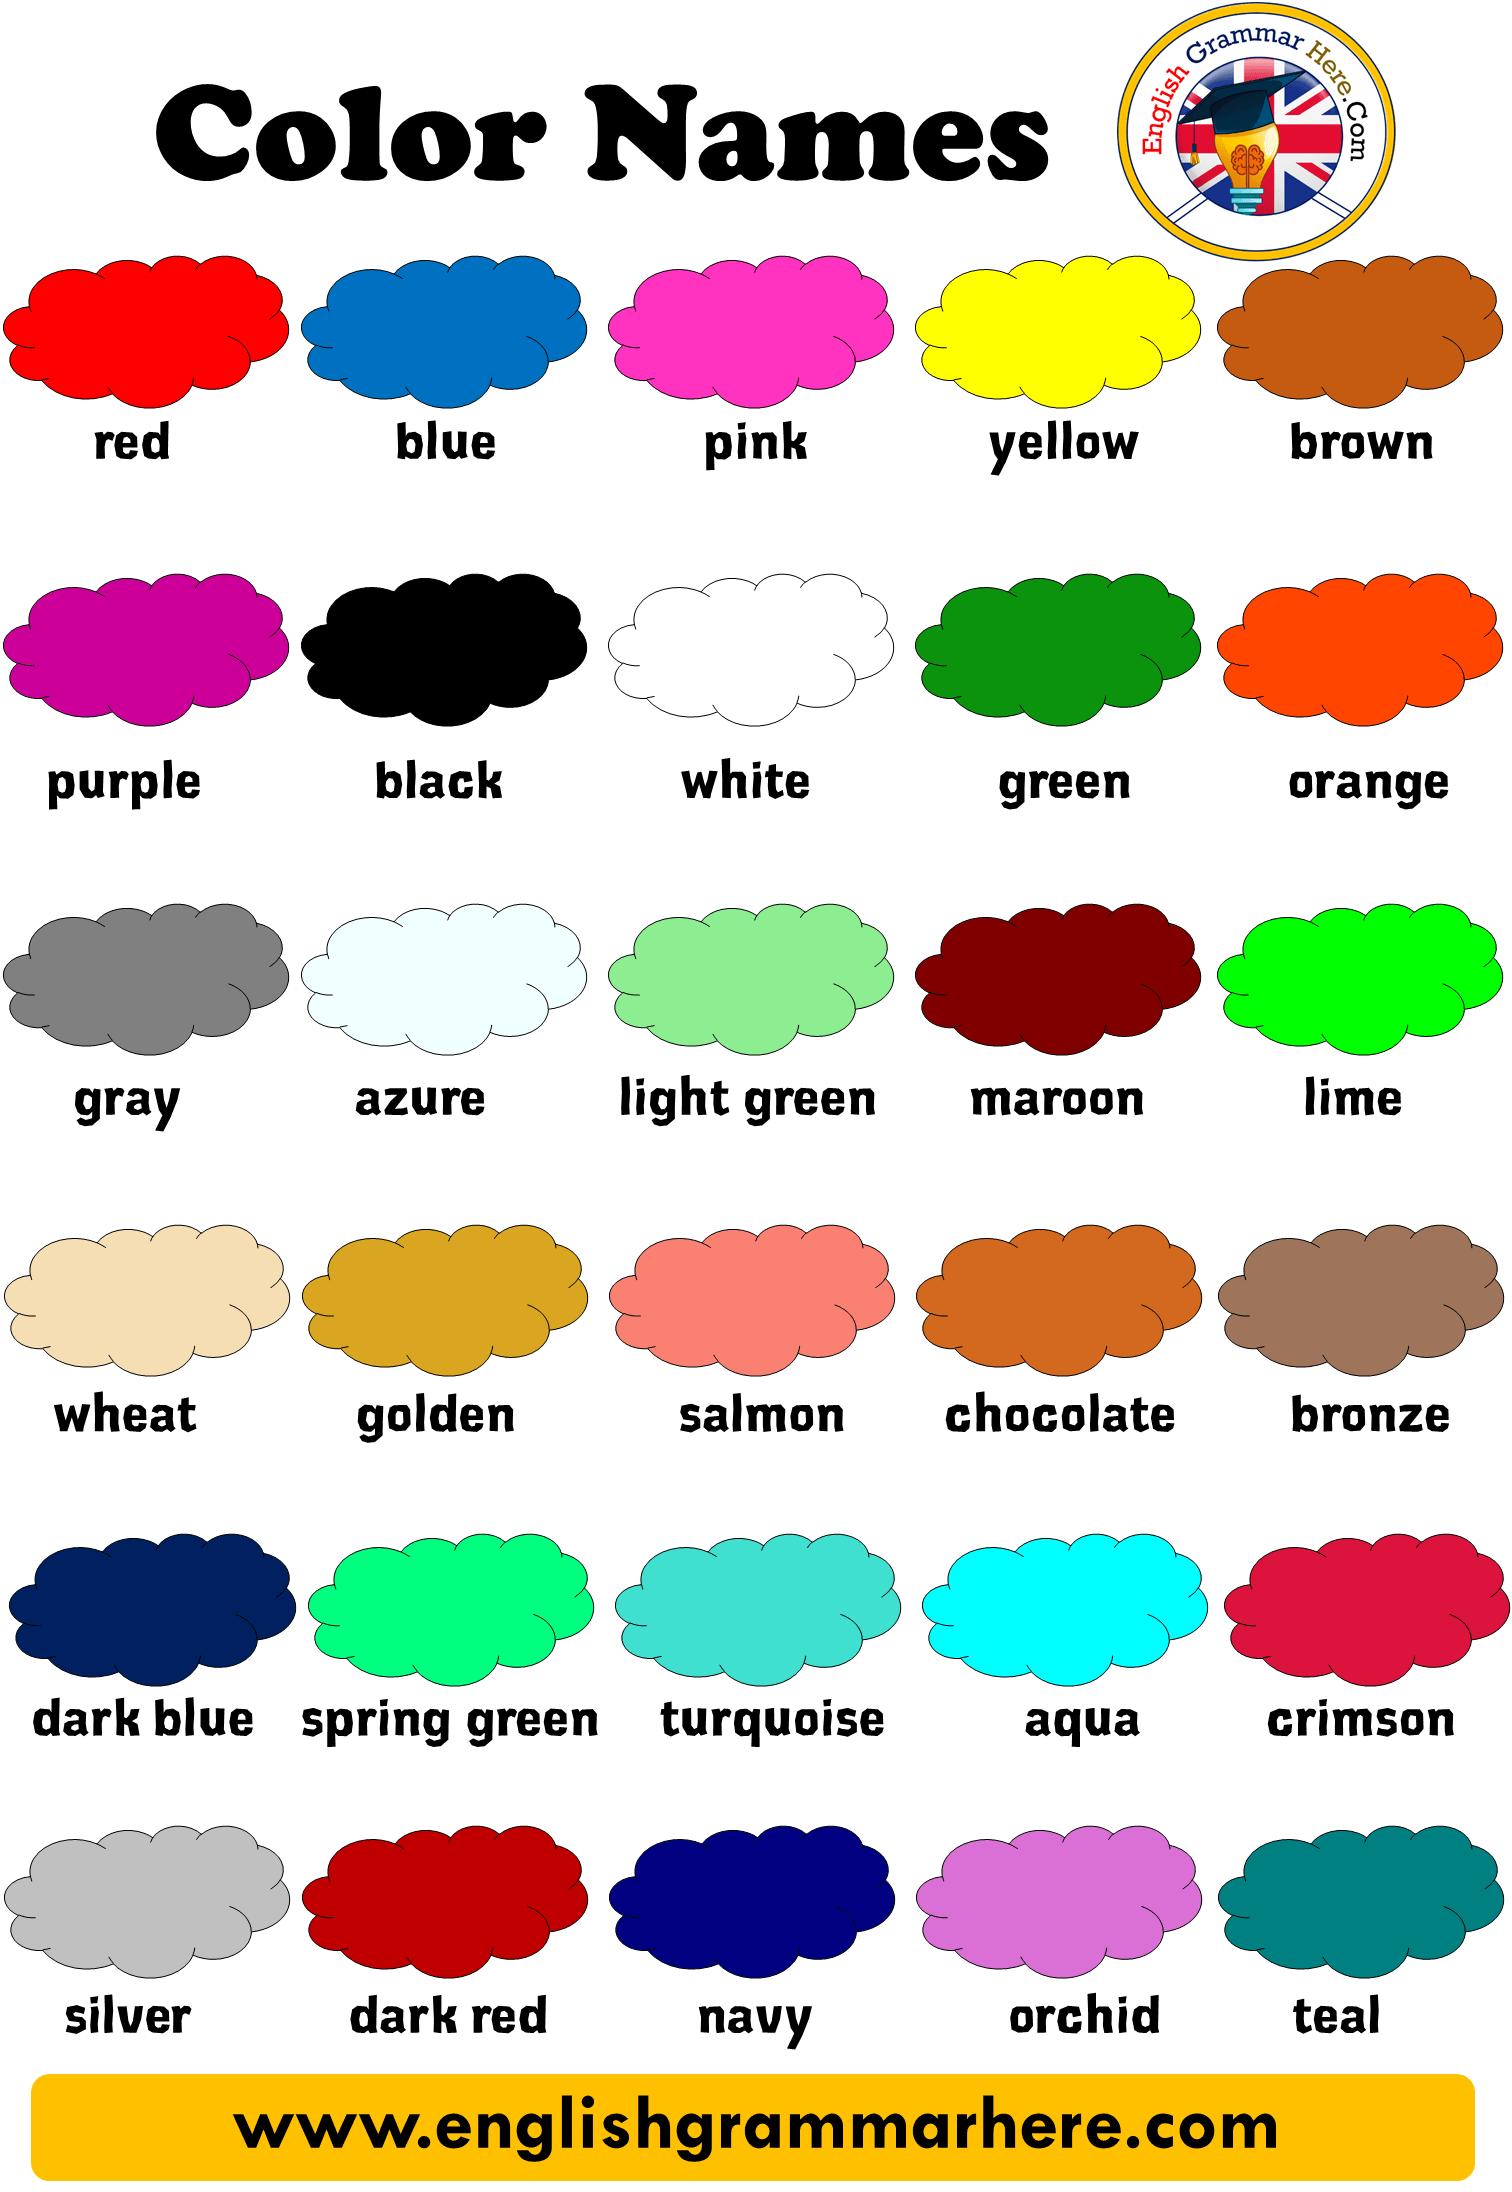 English Color Name List, List Of Colors